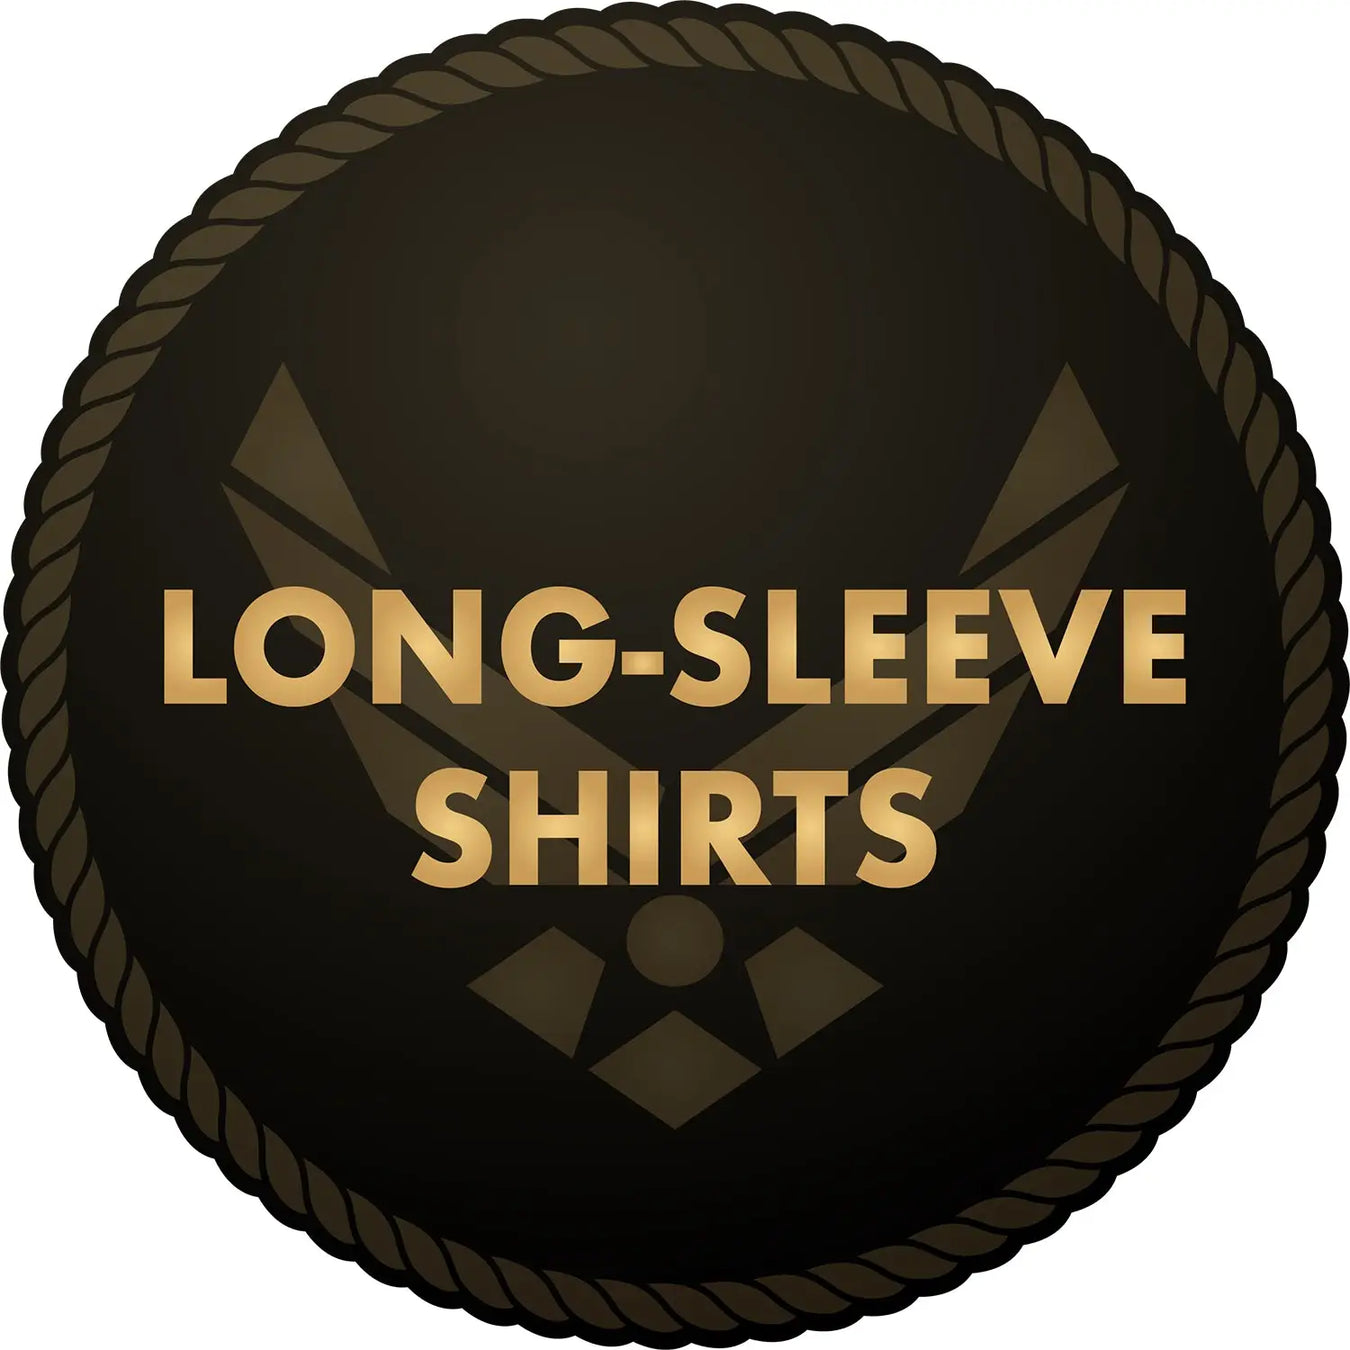 U.S. Air Force Long-Sleeve Shirts